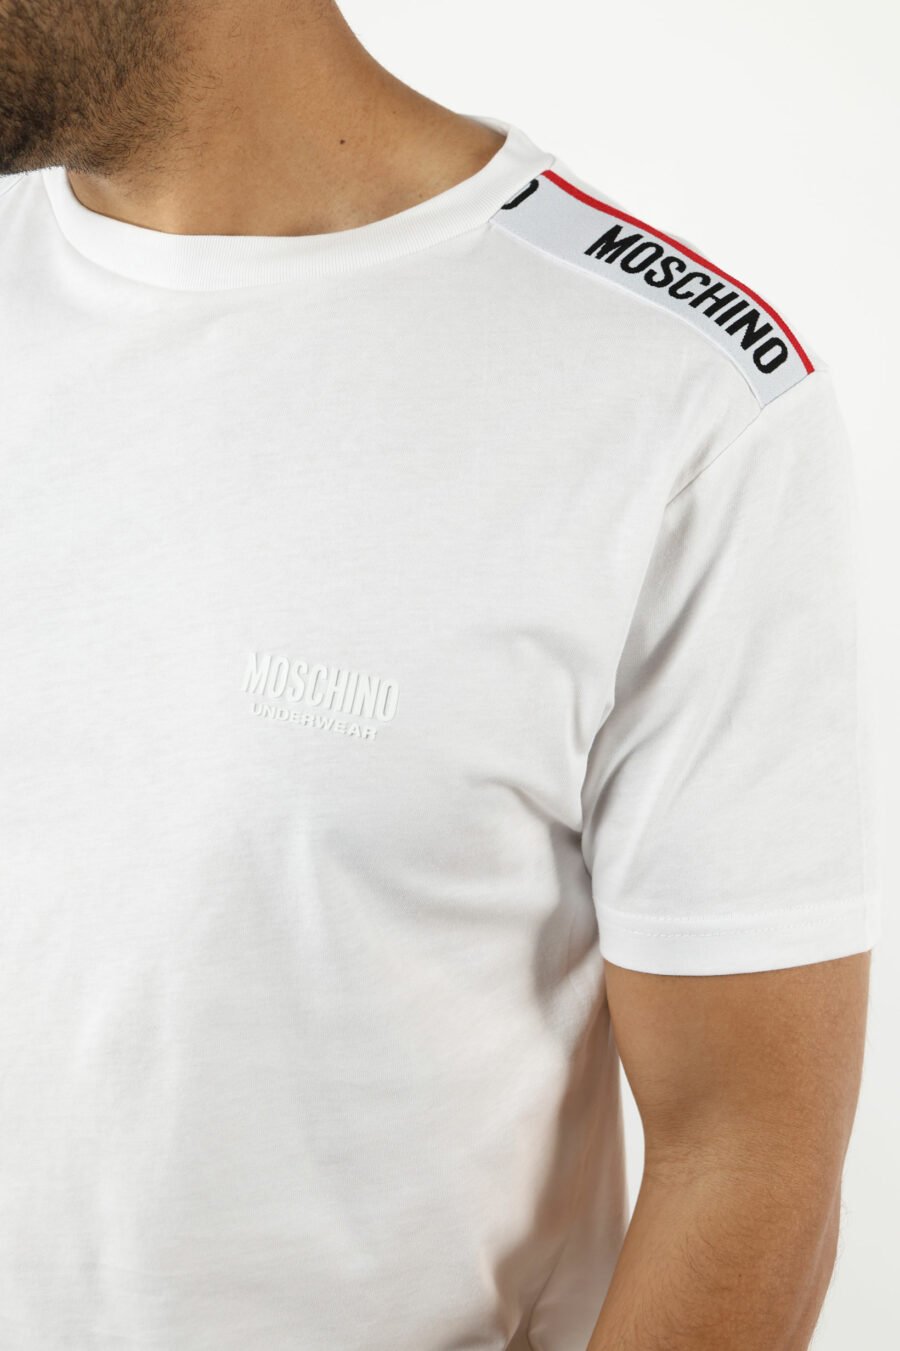 Camiseta blanca con logo negro con detalle rojo en cinta en hombros - 110990